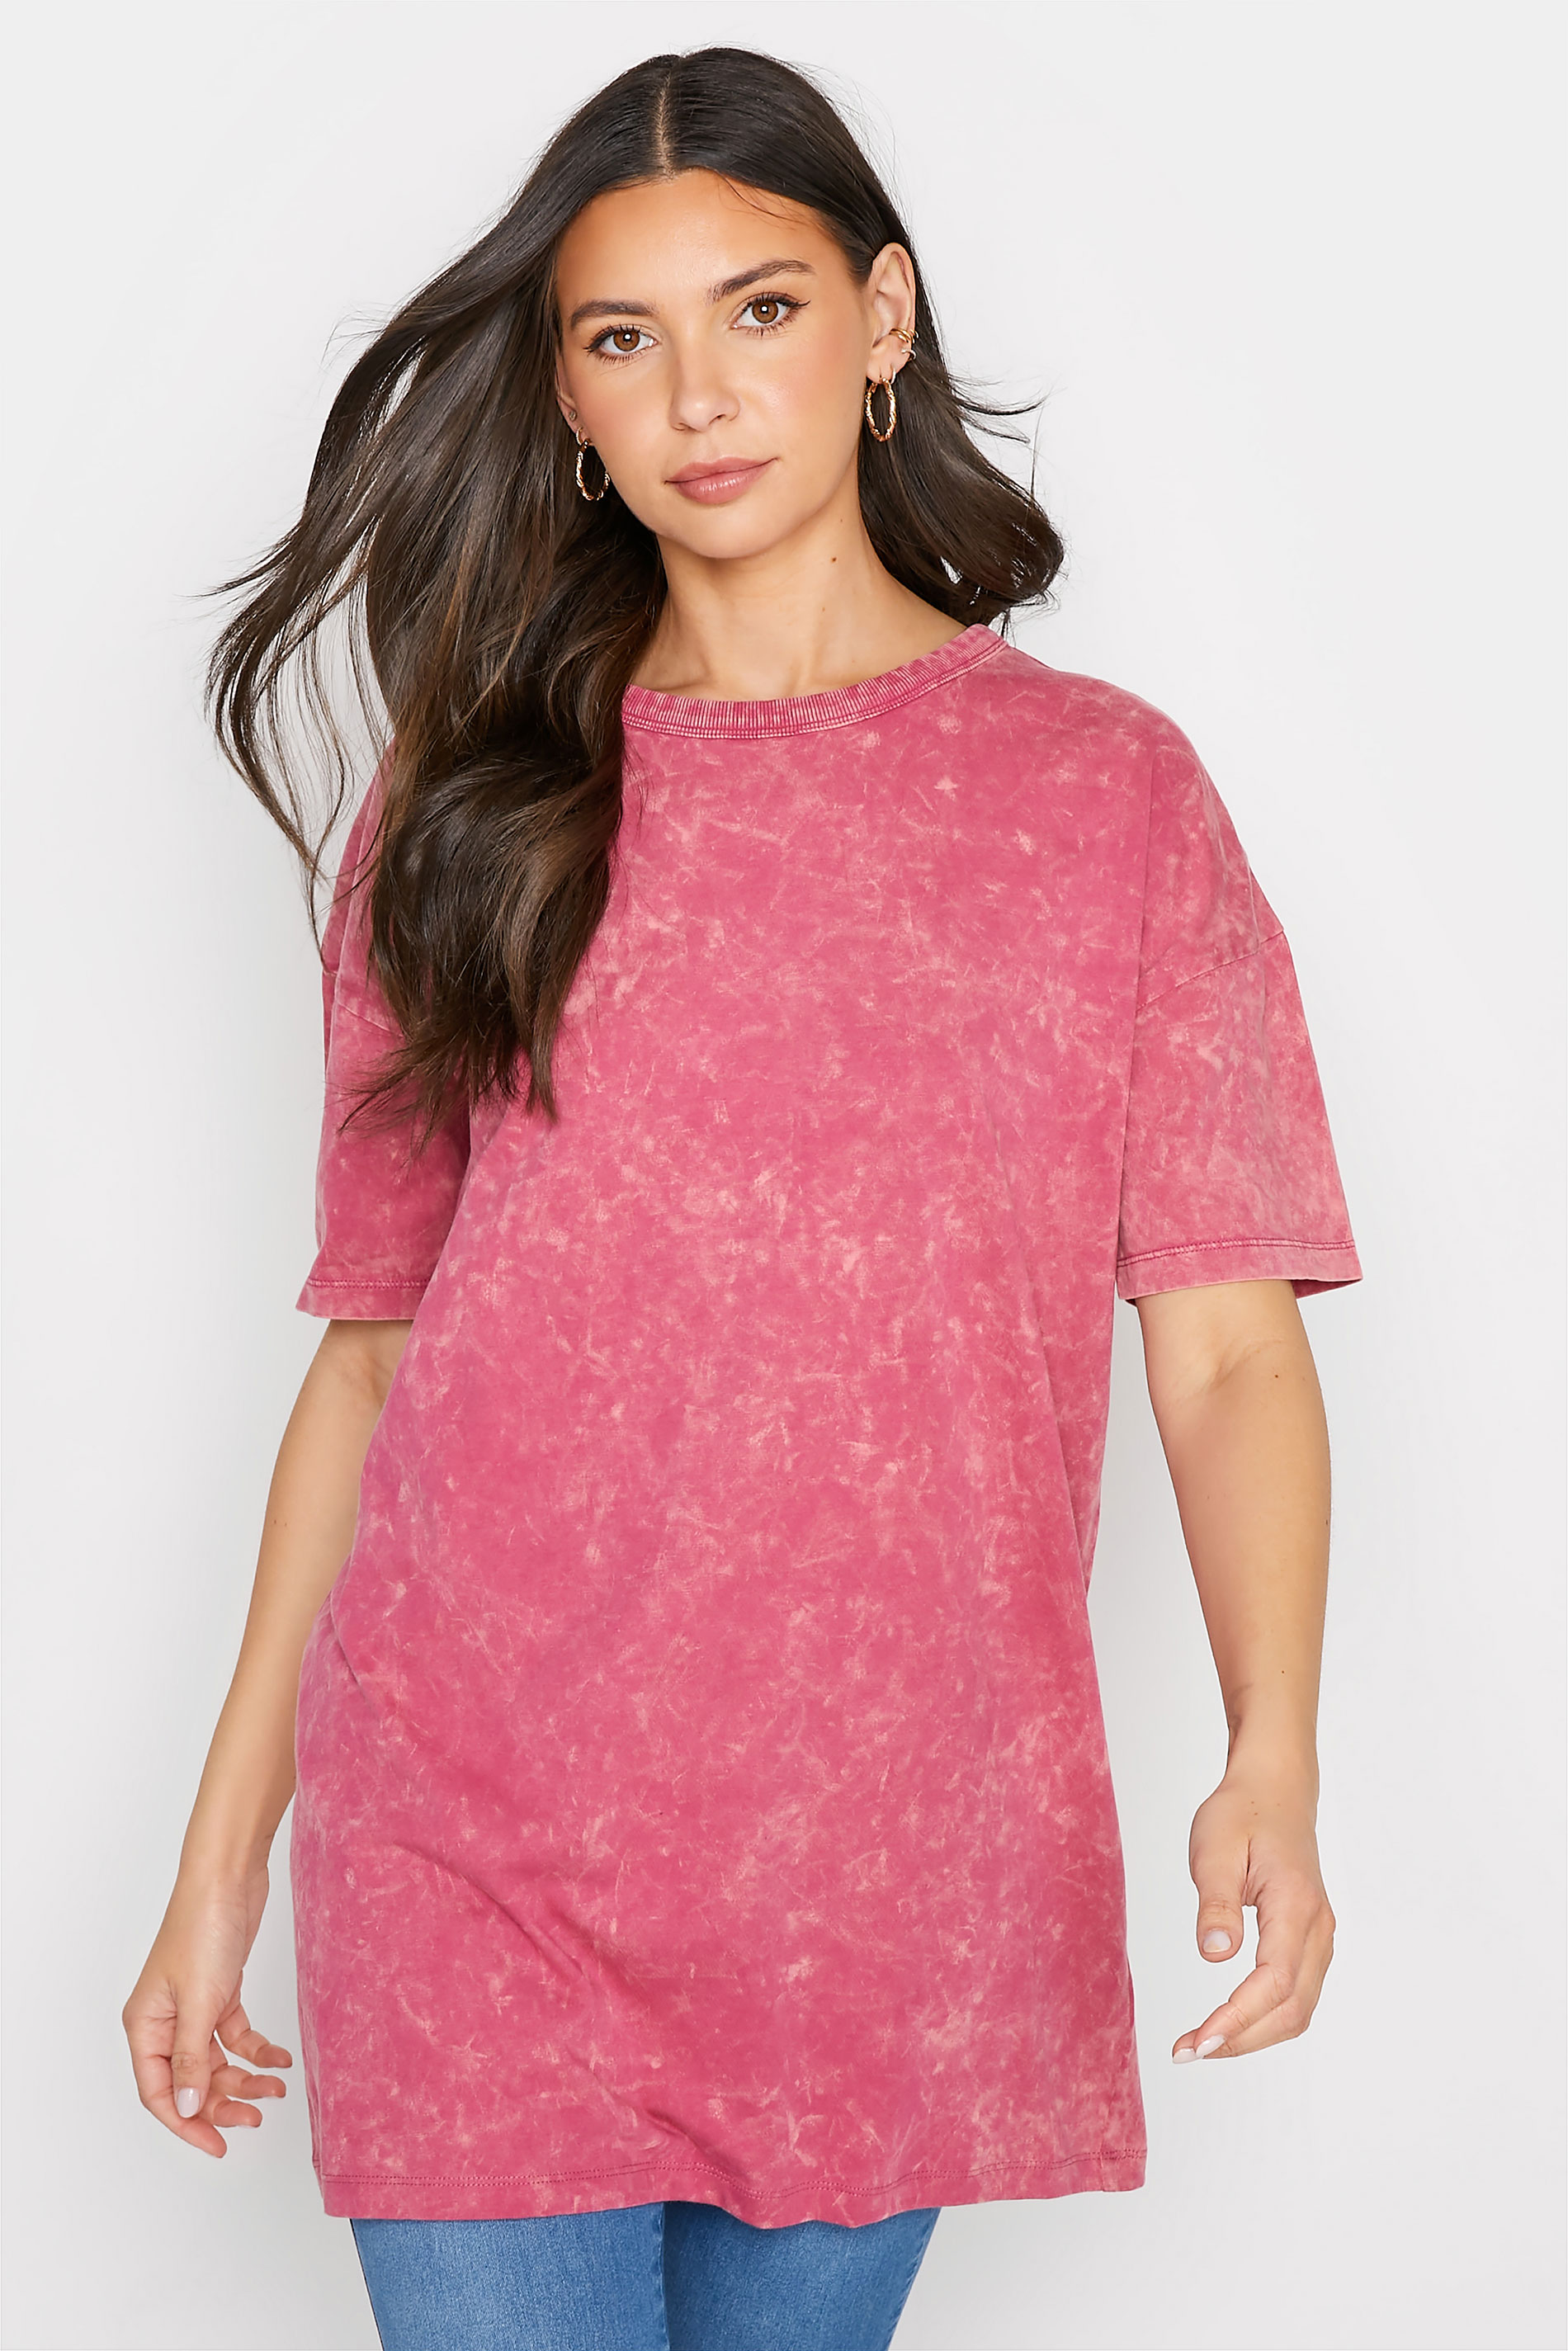 LTS Tall Women's Pink Acid Wash Oversized T-Shirt | Long Tall Sally  1